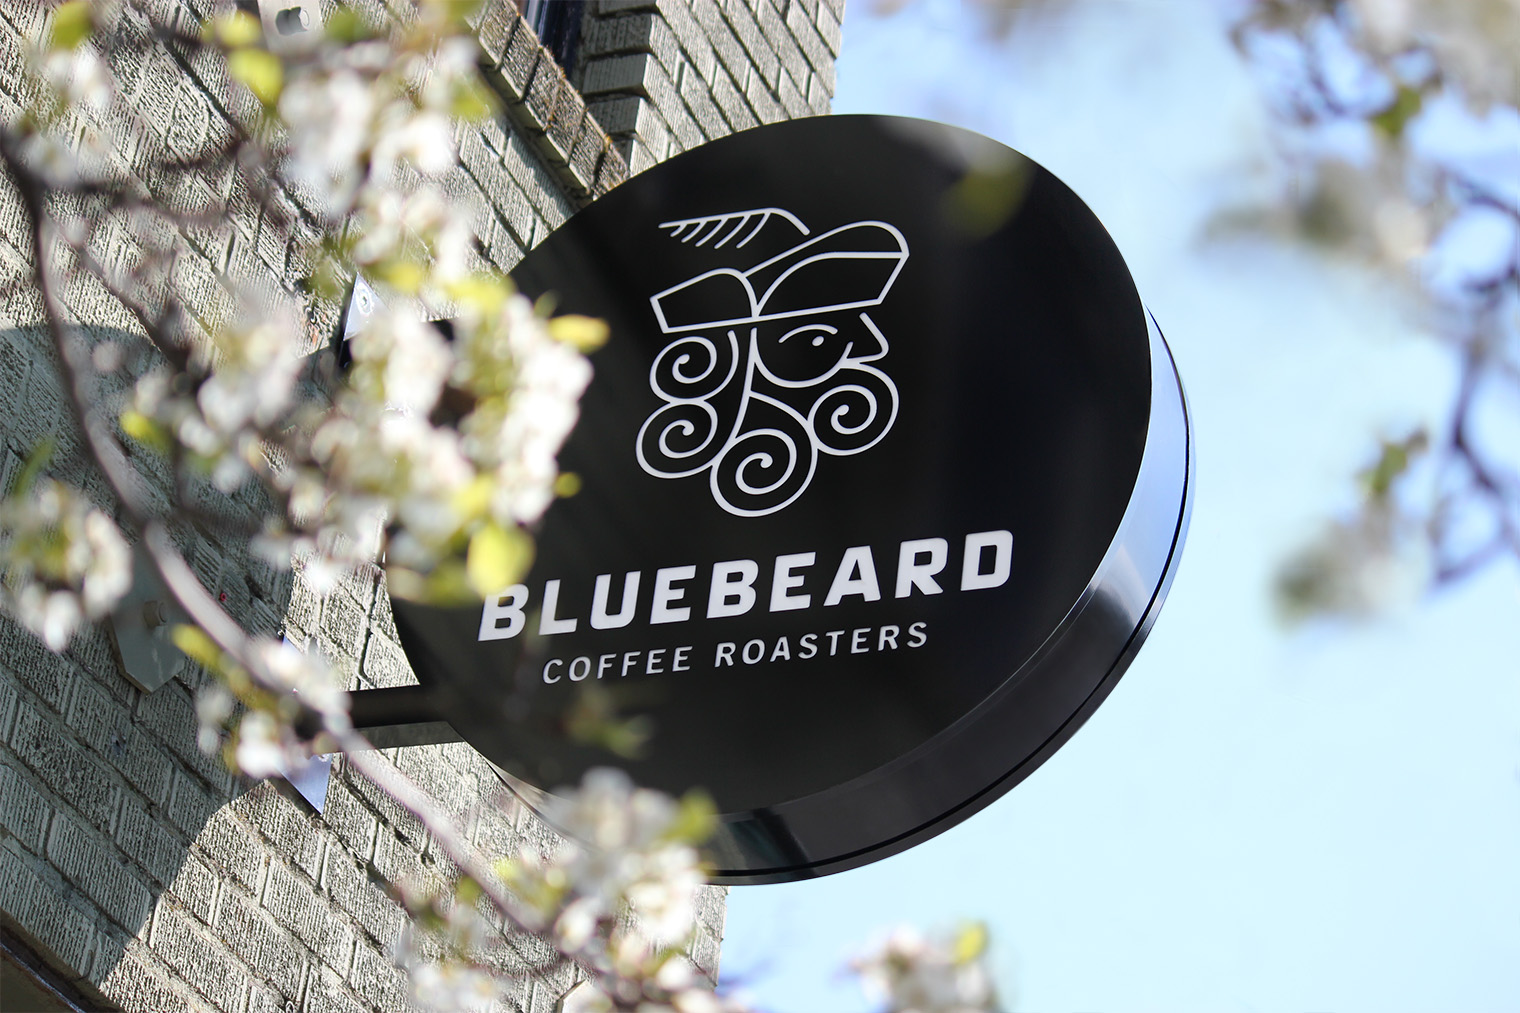 Bluebeard Coffee Roasters sign